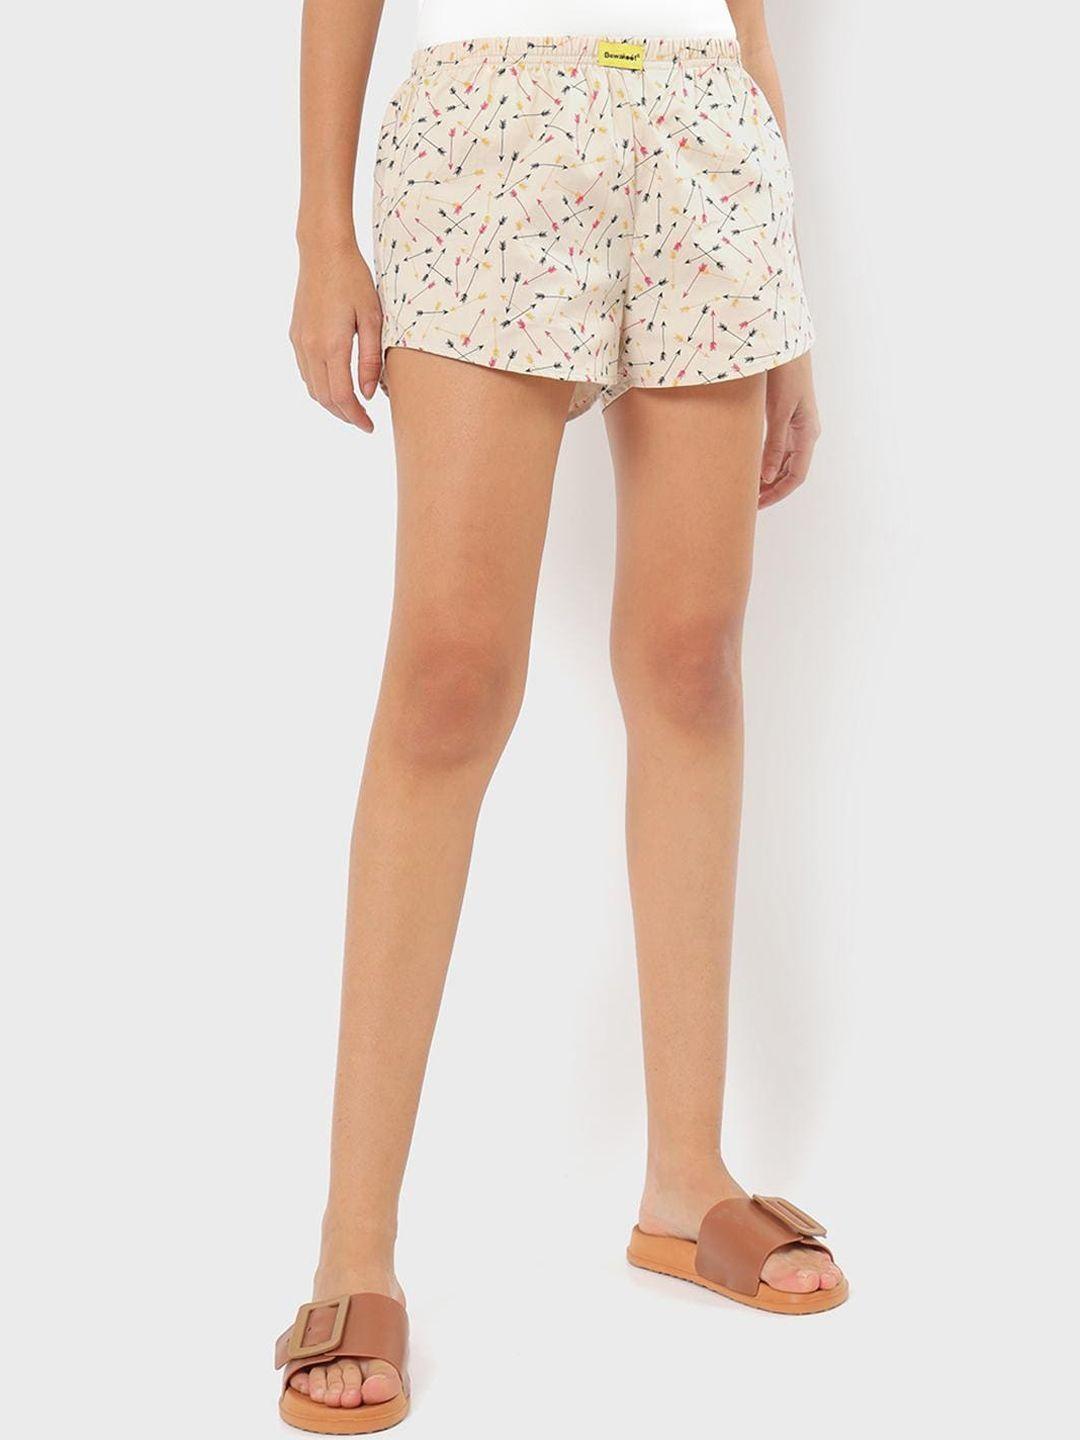 bewakoof women printed cotton regular fit shorts